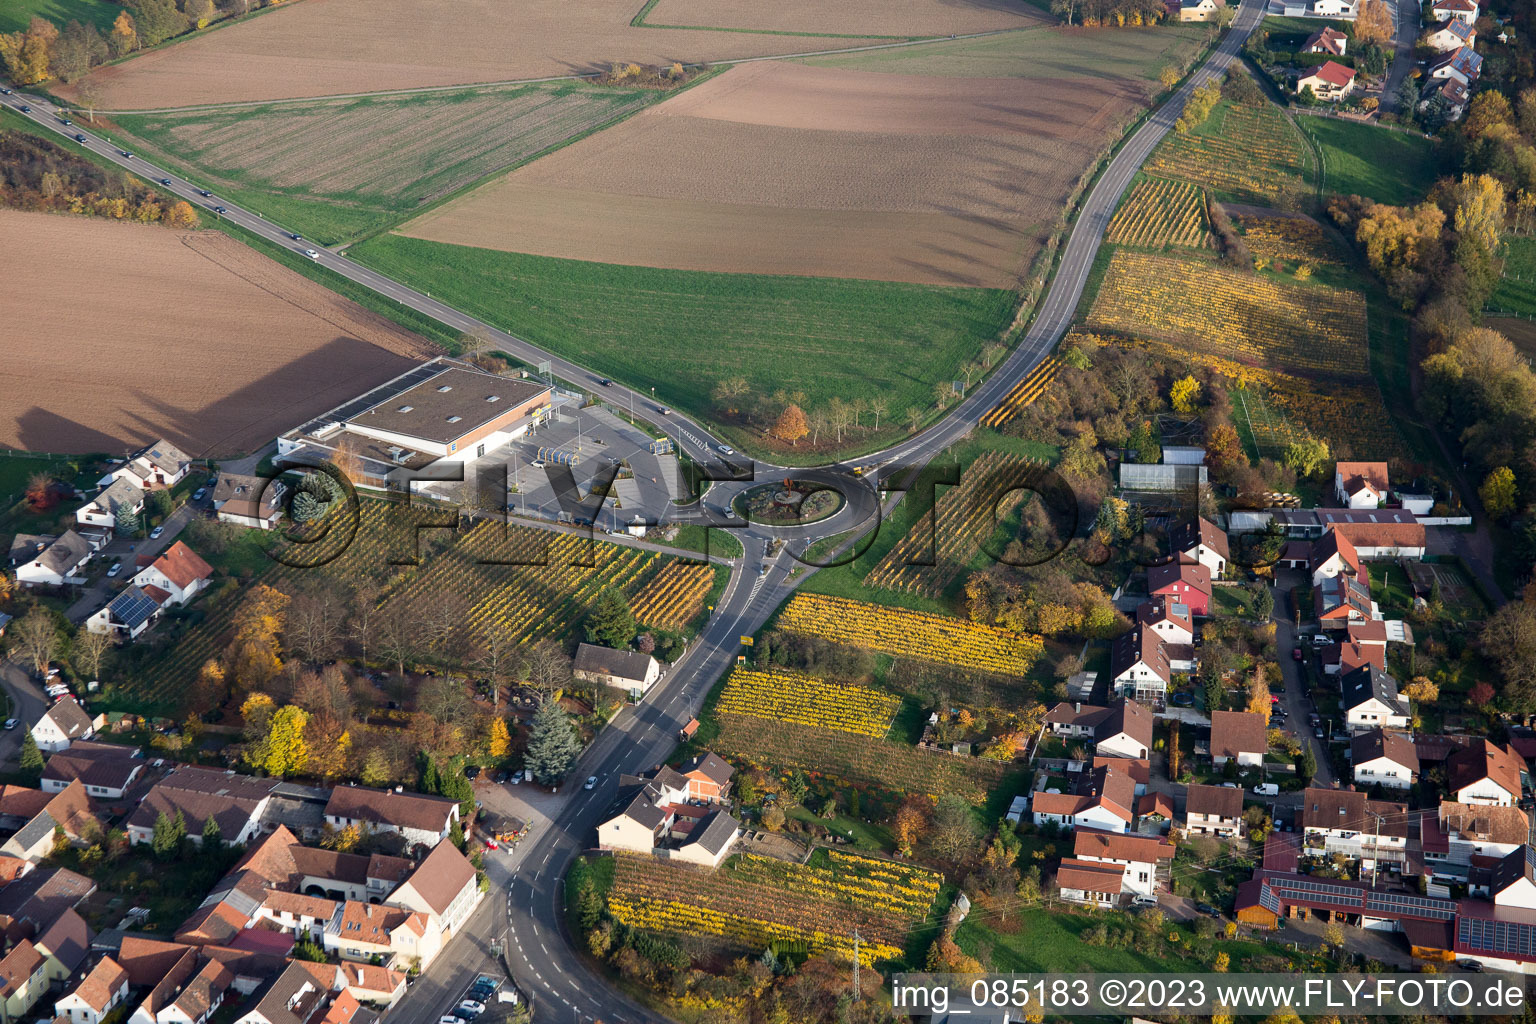 Drone recording of District Appenhofen in Billigheim-Ingenheim in the state Rhineland-Palatinate, Germany